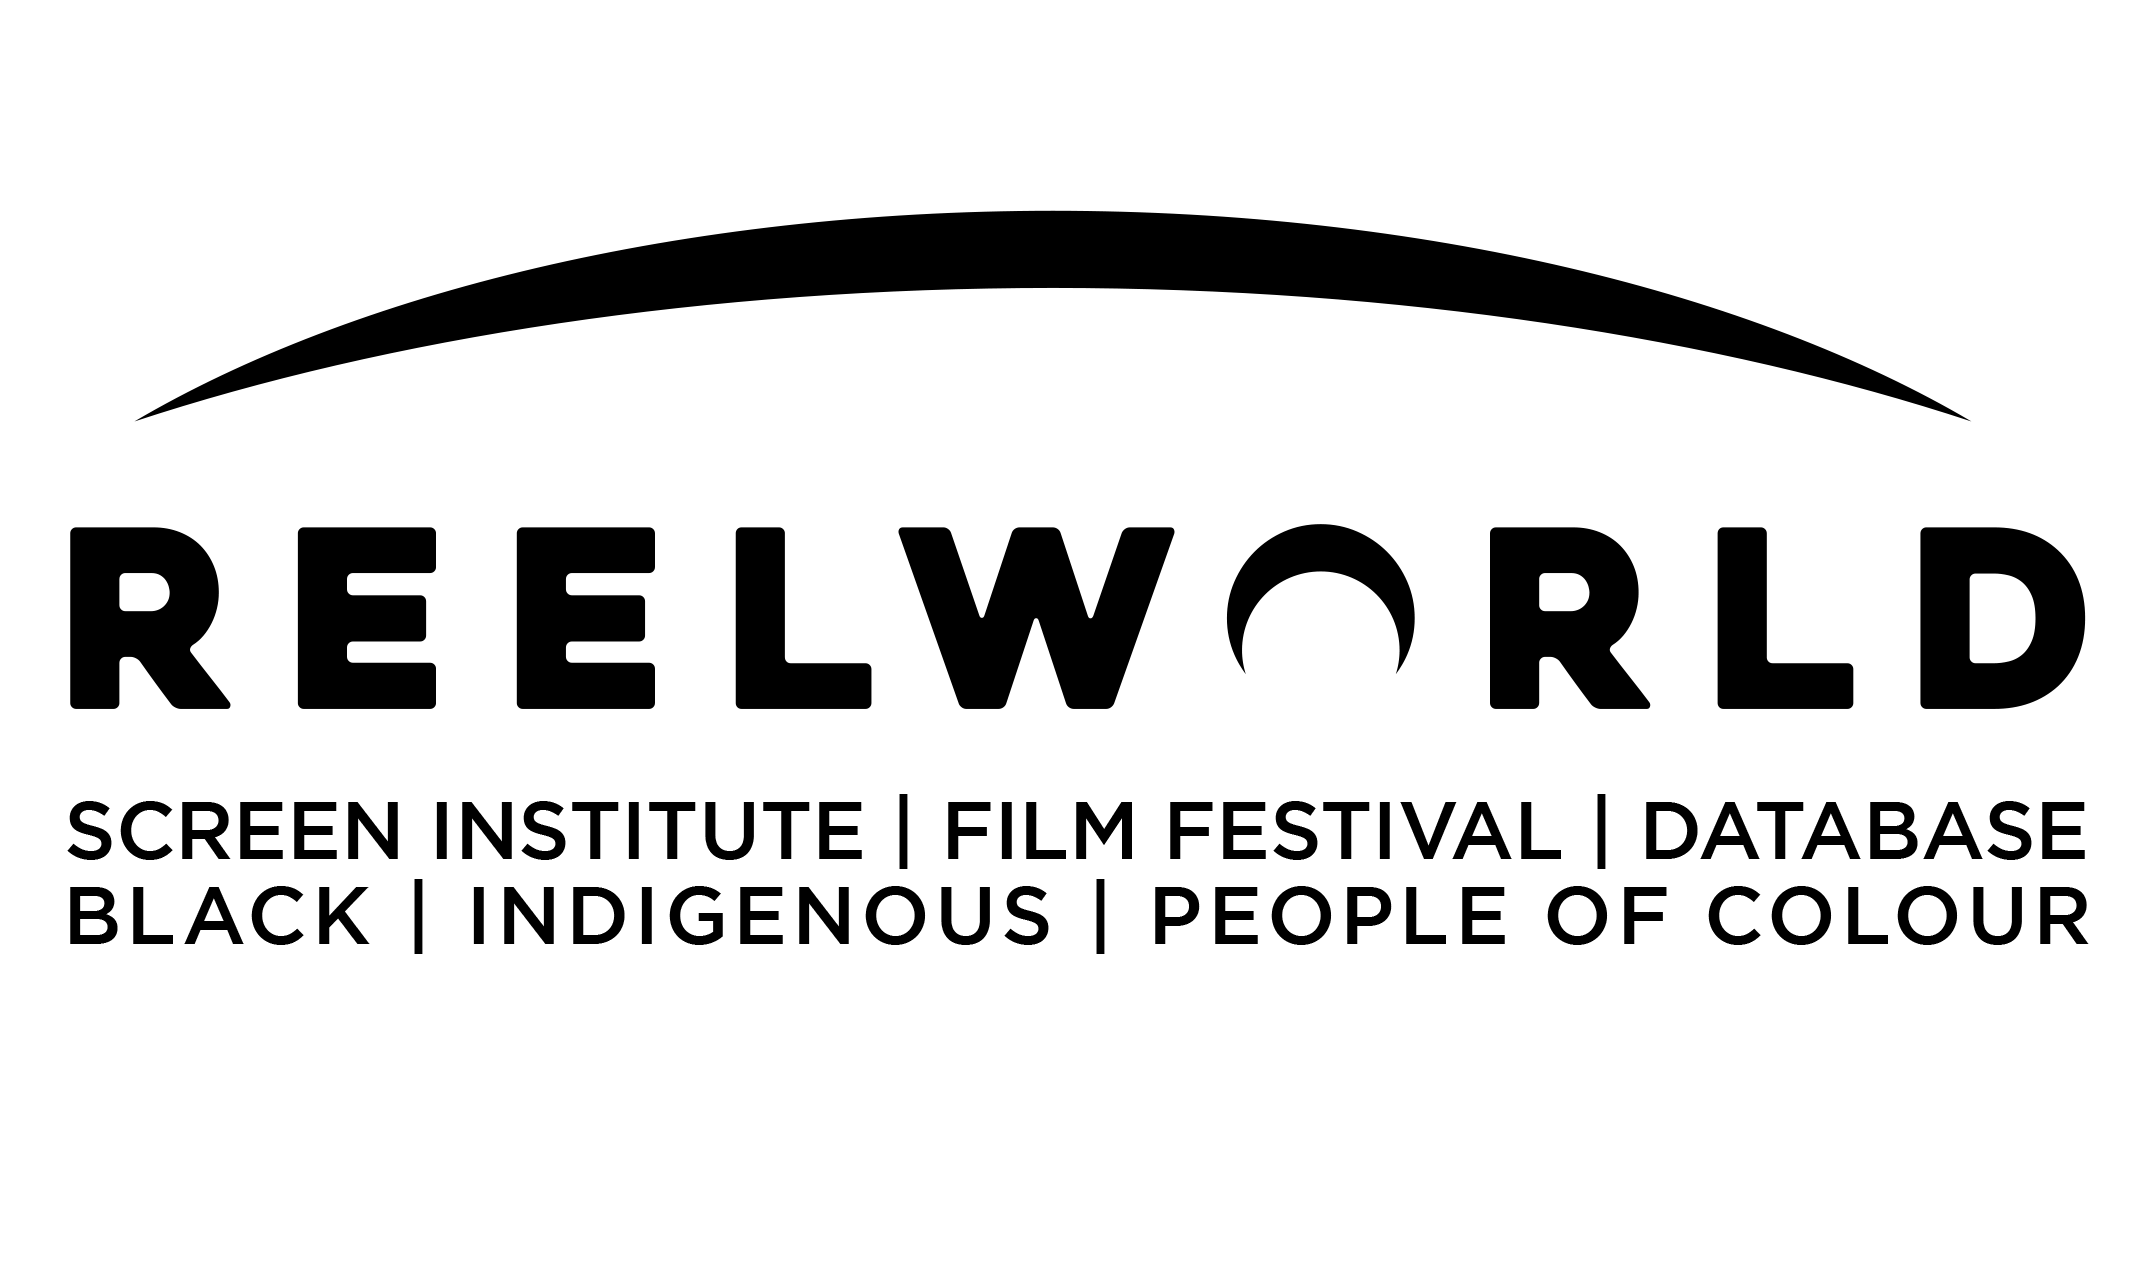 Reelworld logo